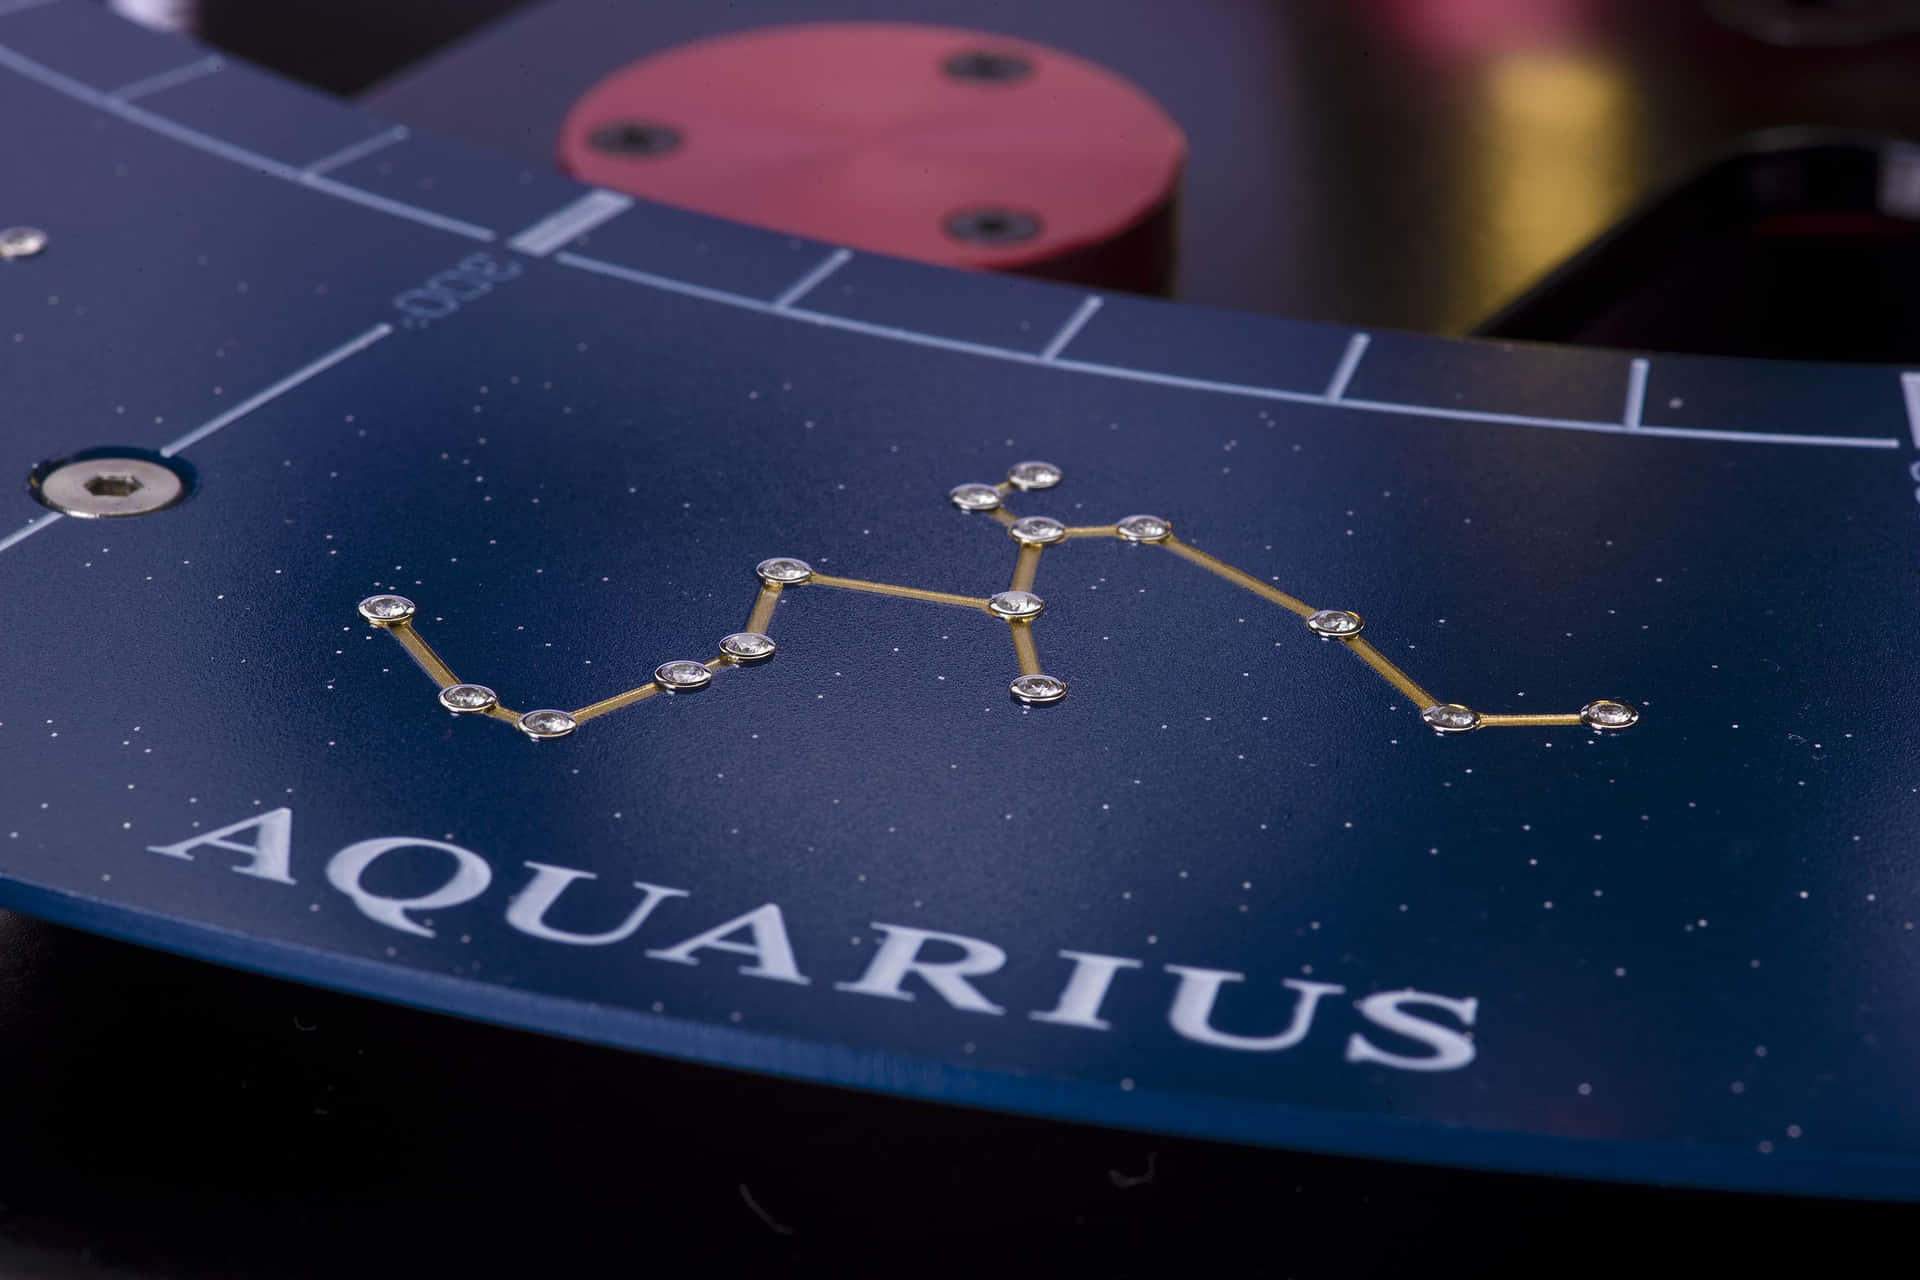 A beautiful starry night illuminating the constellation Aquarius